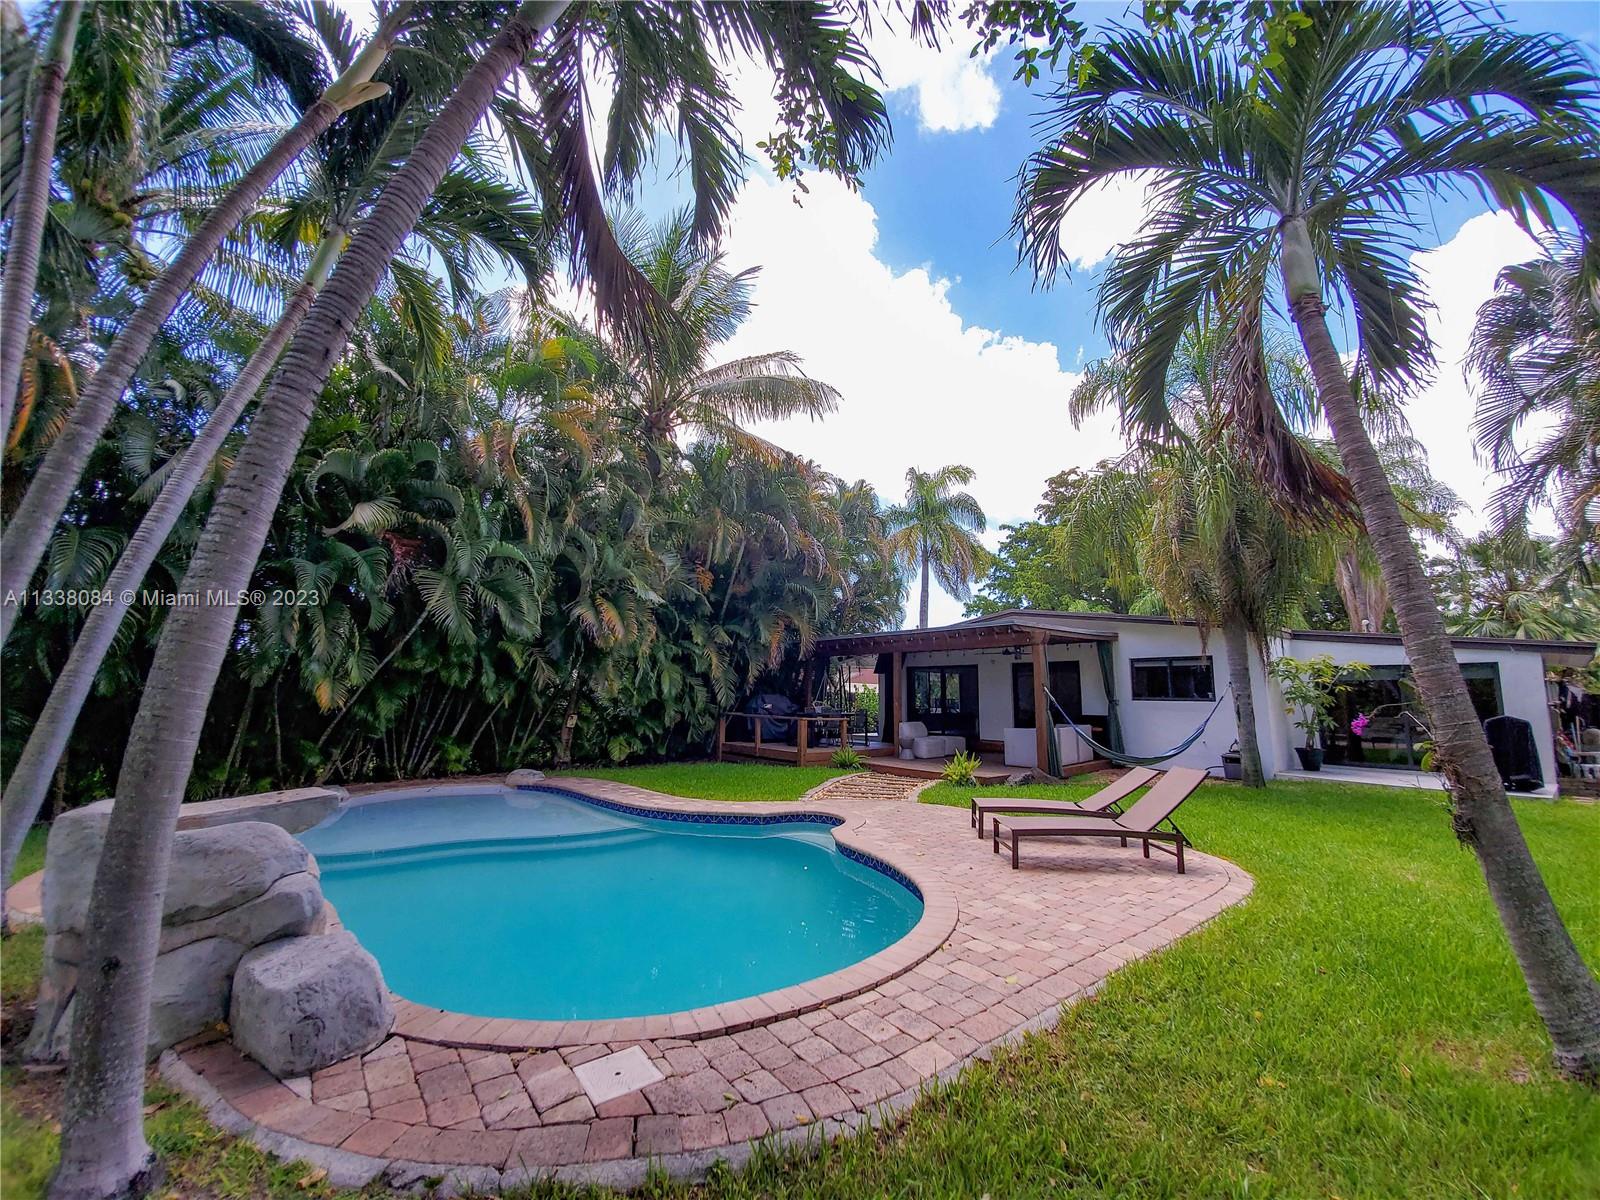 beautiful backyard, coconut trees, pool, 2 decks, lake access